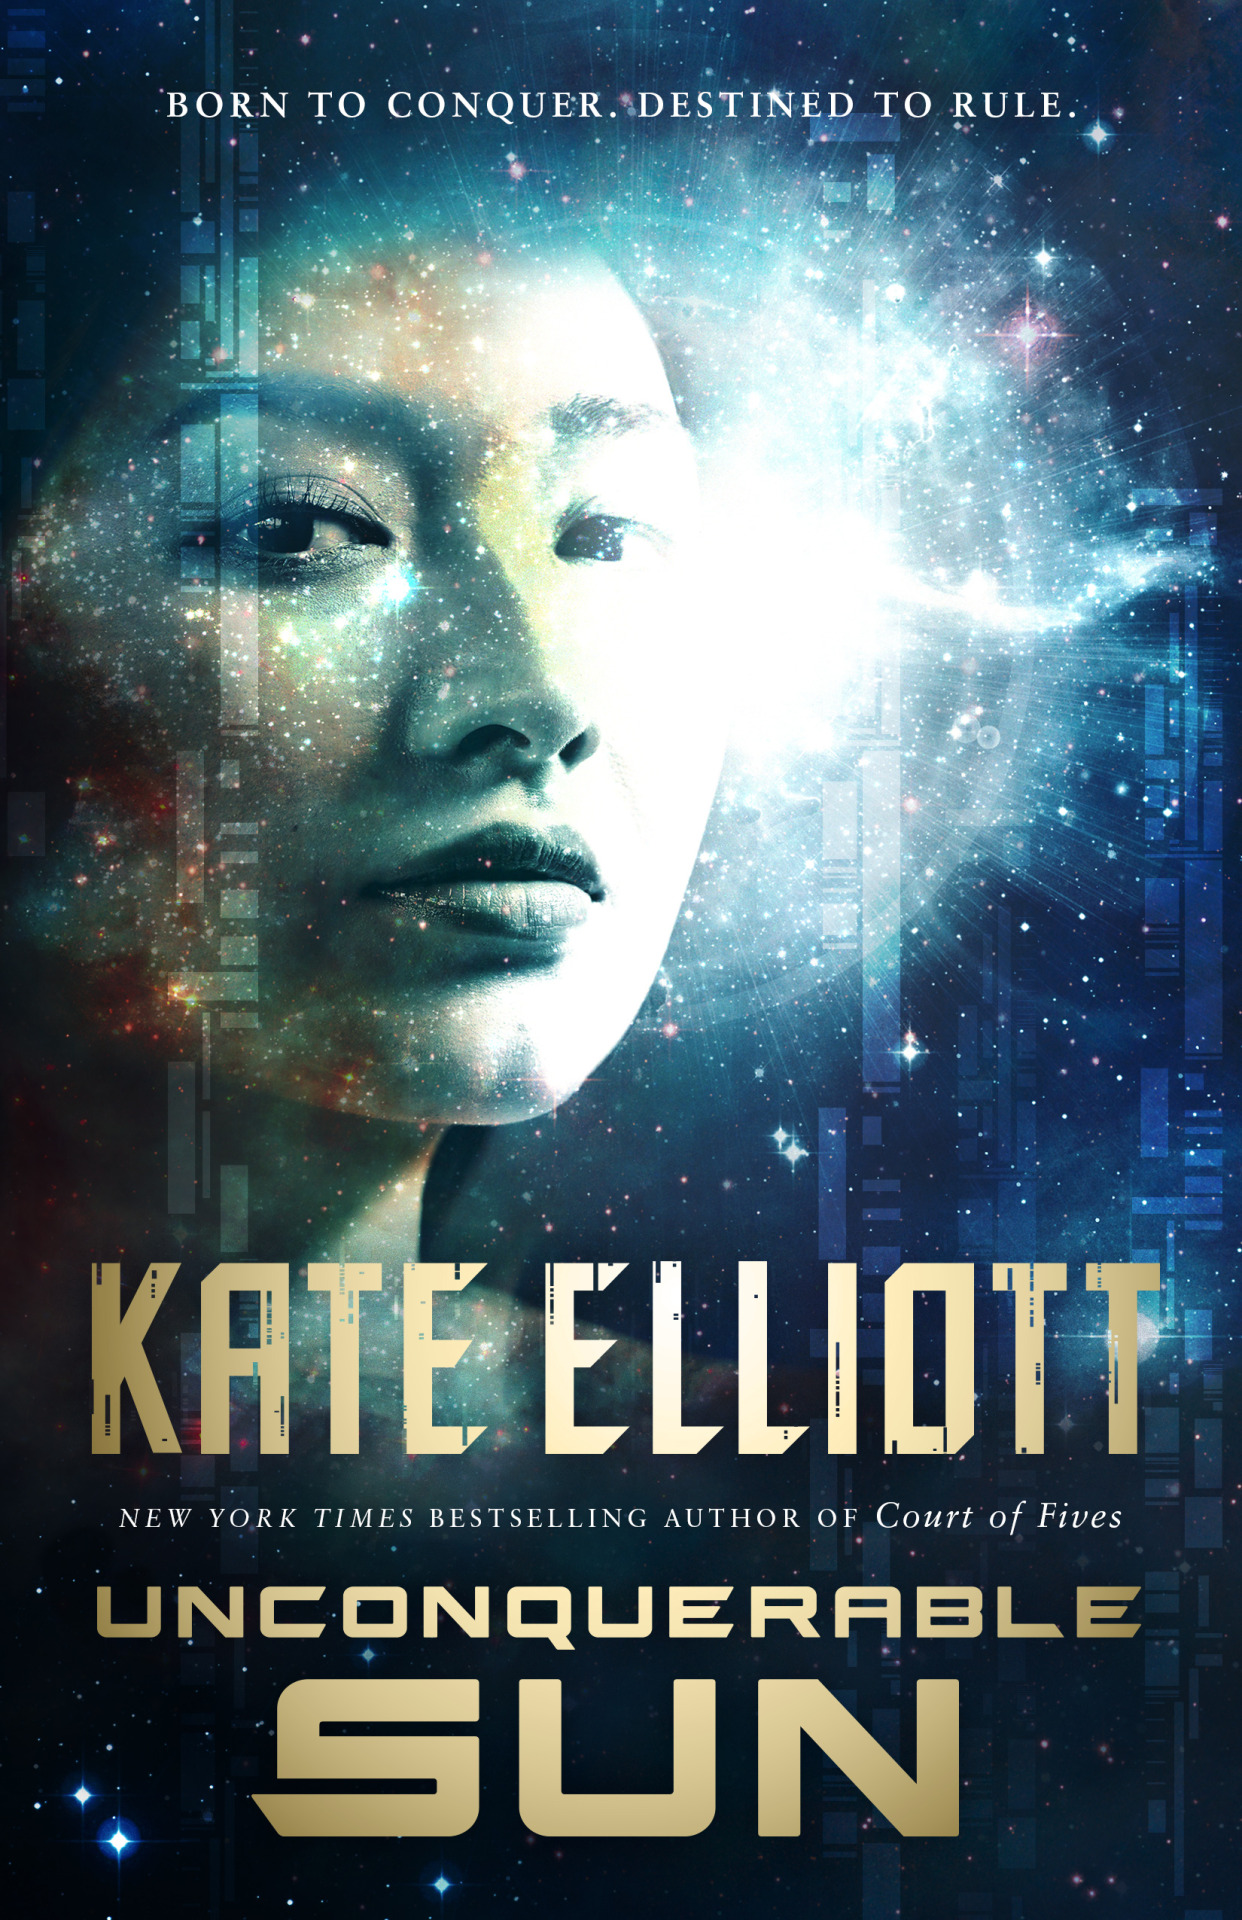 (actress) kate elliott Kate Elliott